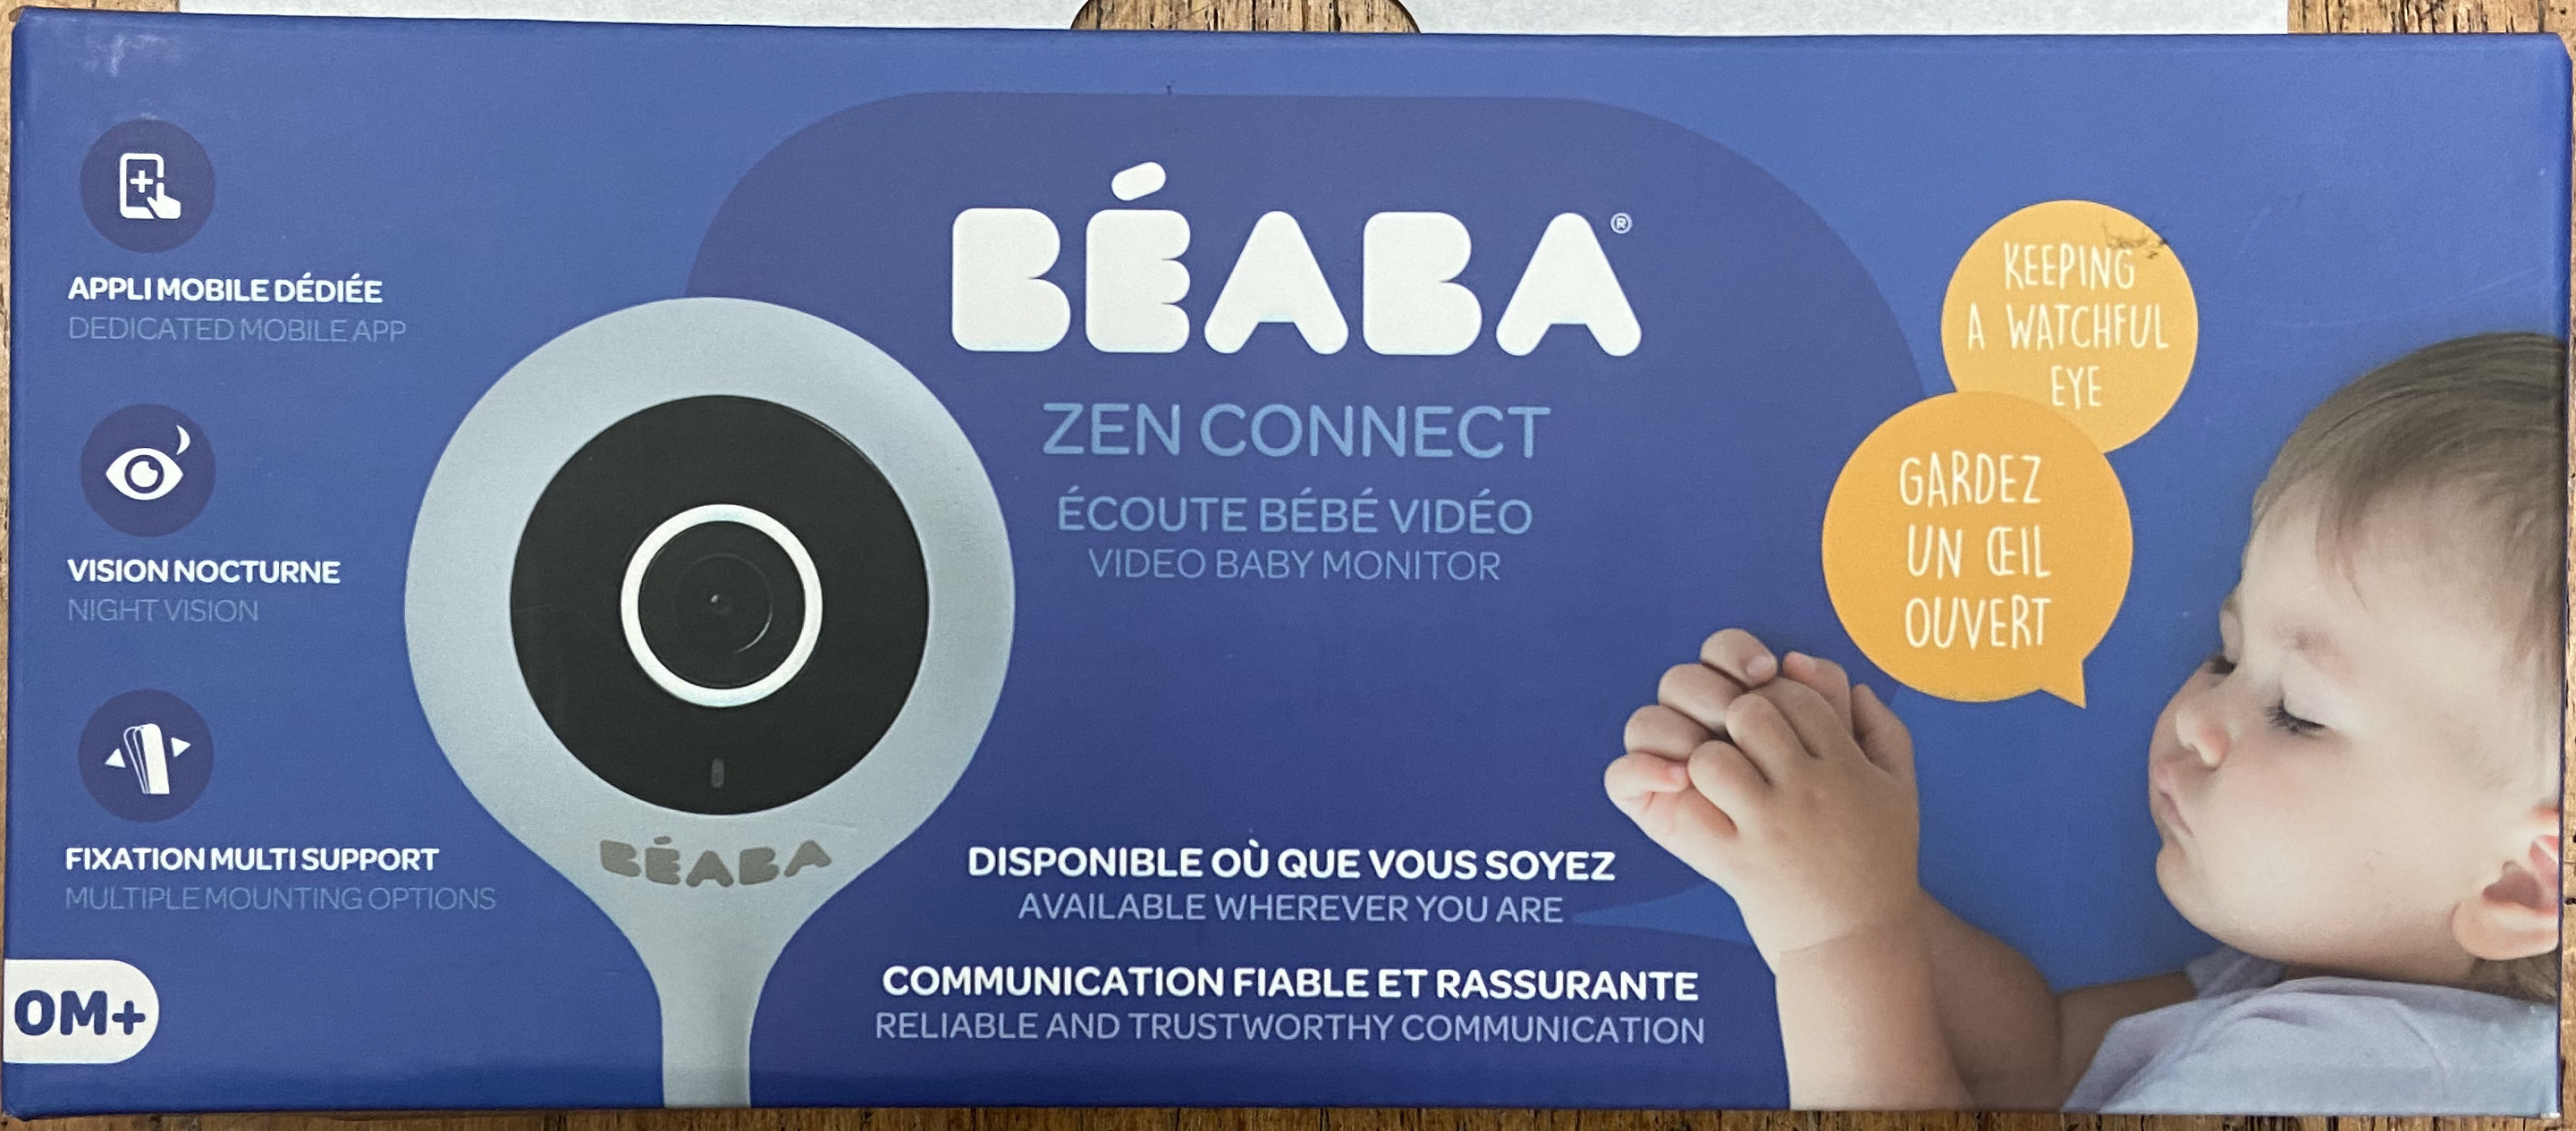 Babyphone - Béaba